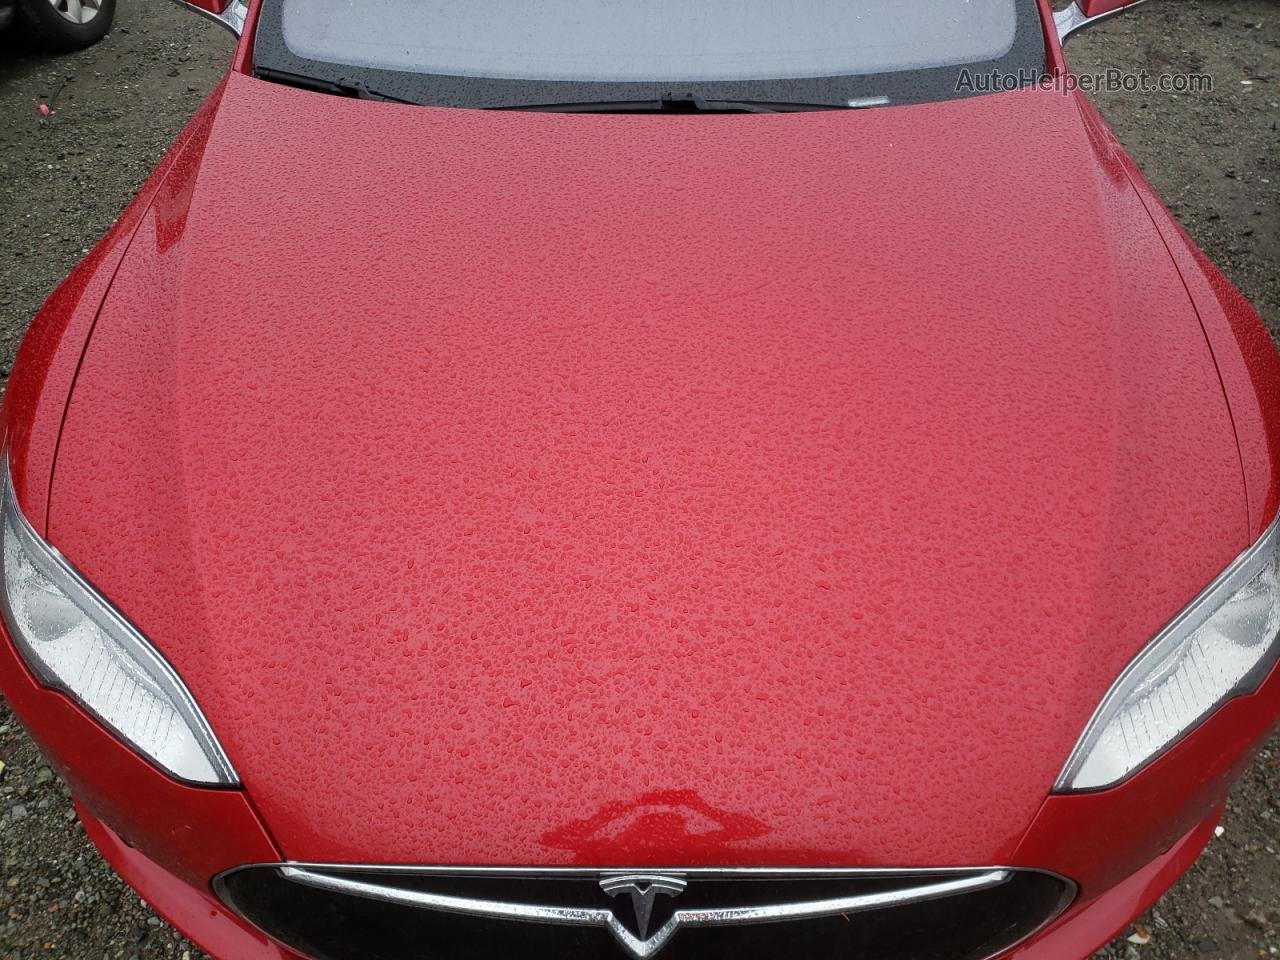 2015 Tesla Model S  Красный vin: 5YJSA1E46FF103697